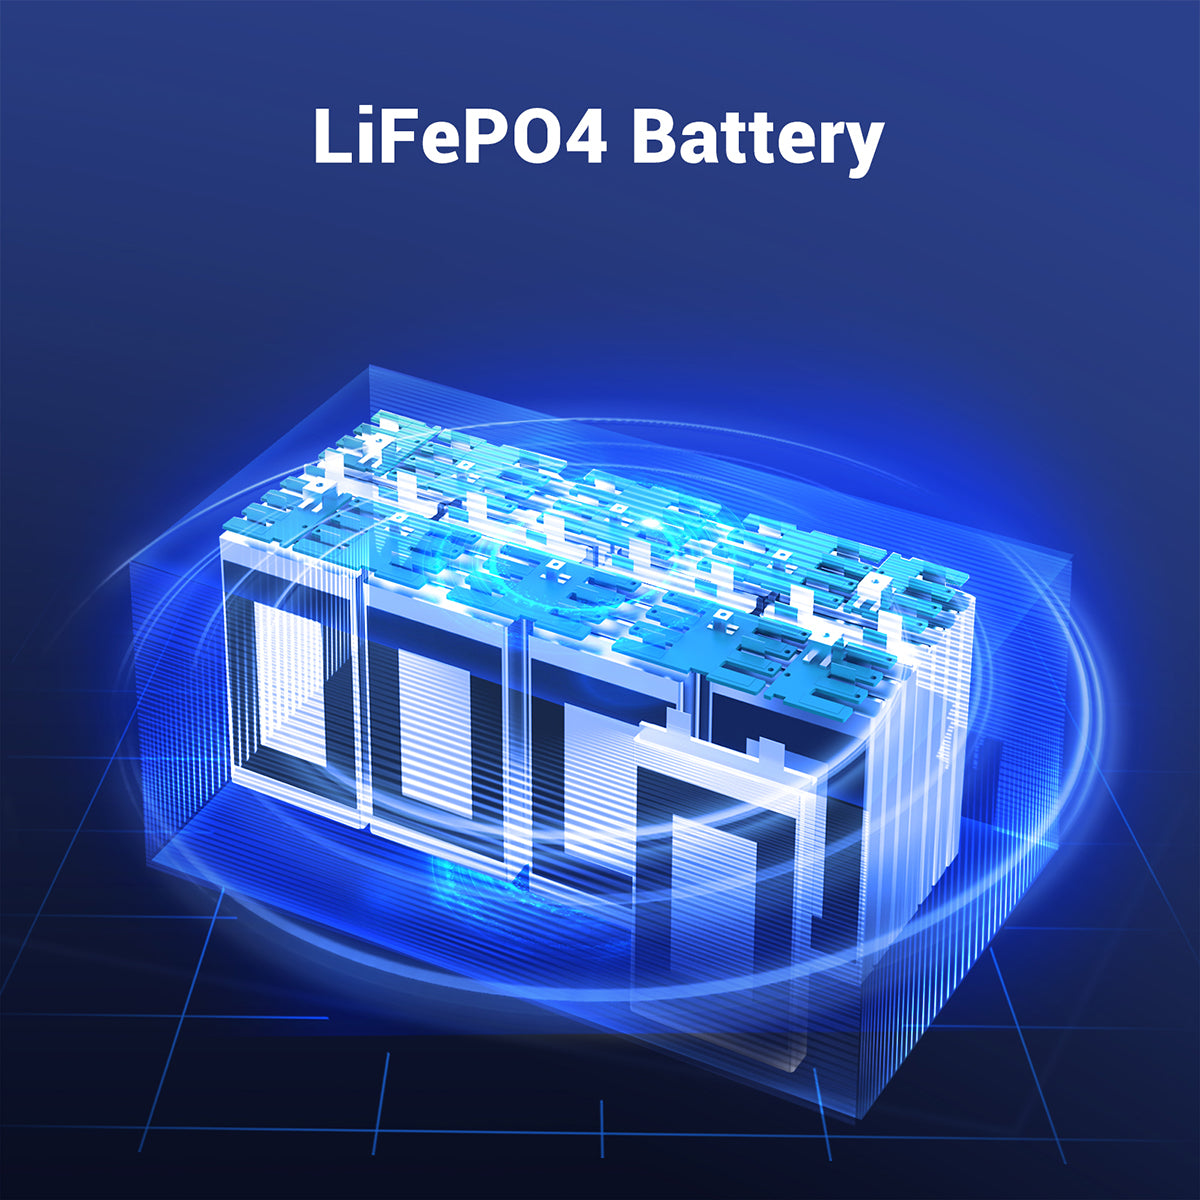 JUPITEK Portable Power Station S1200, 1228Wh LiFePo4 Battery